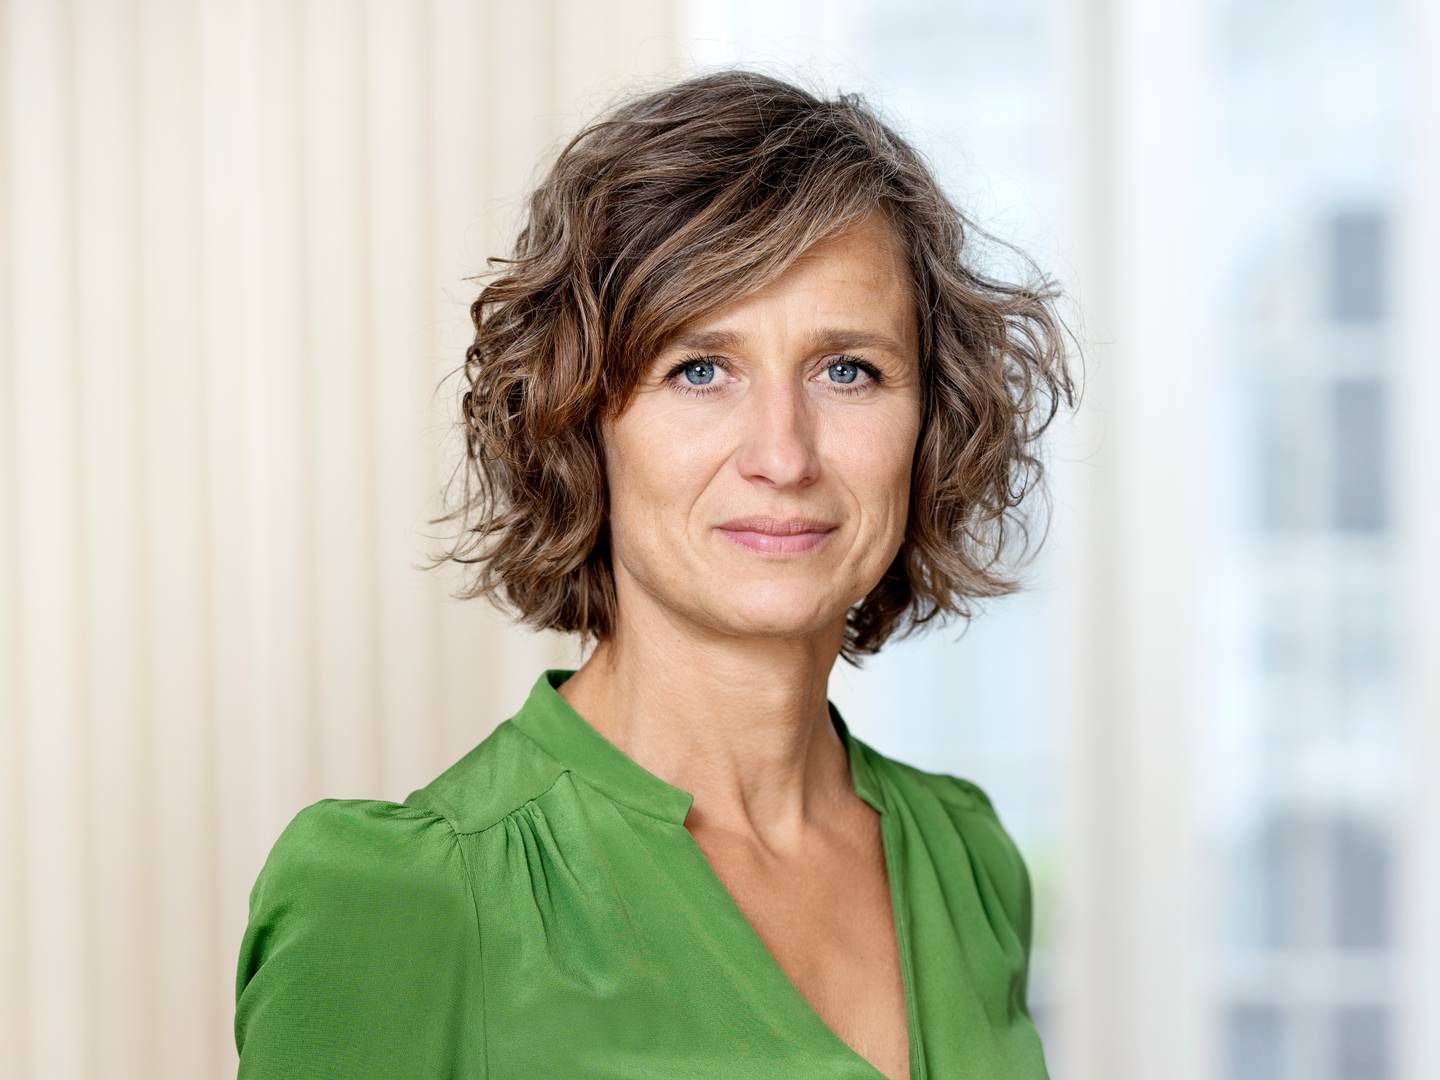 Birgitte Søgaard Holm has decided to resign from her job as head of Investering Danmark/Director of Investments & Savings at Finans Danmark, | Foto: PR / Finans Danmark